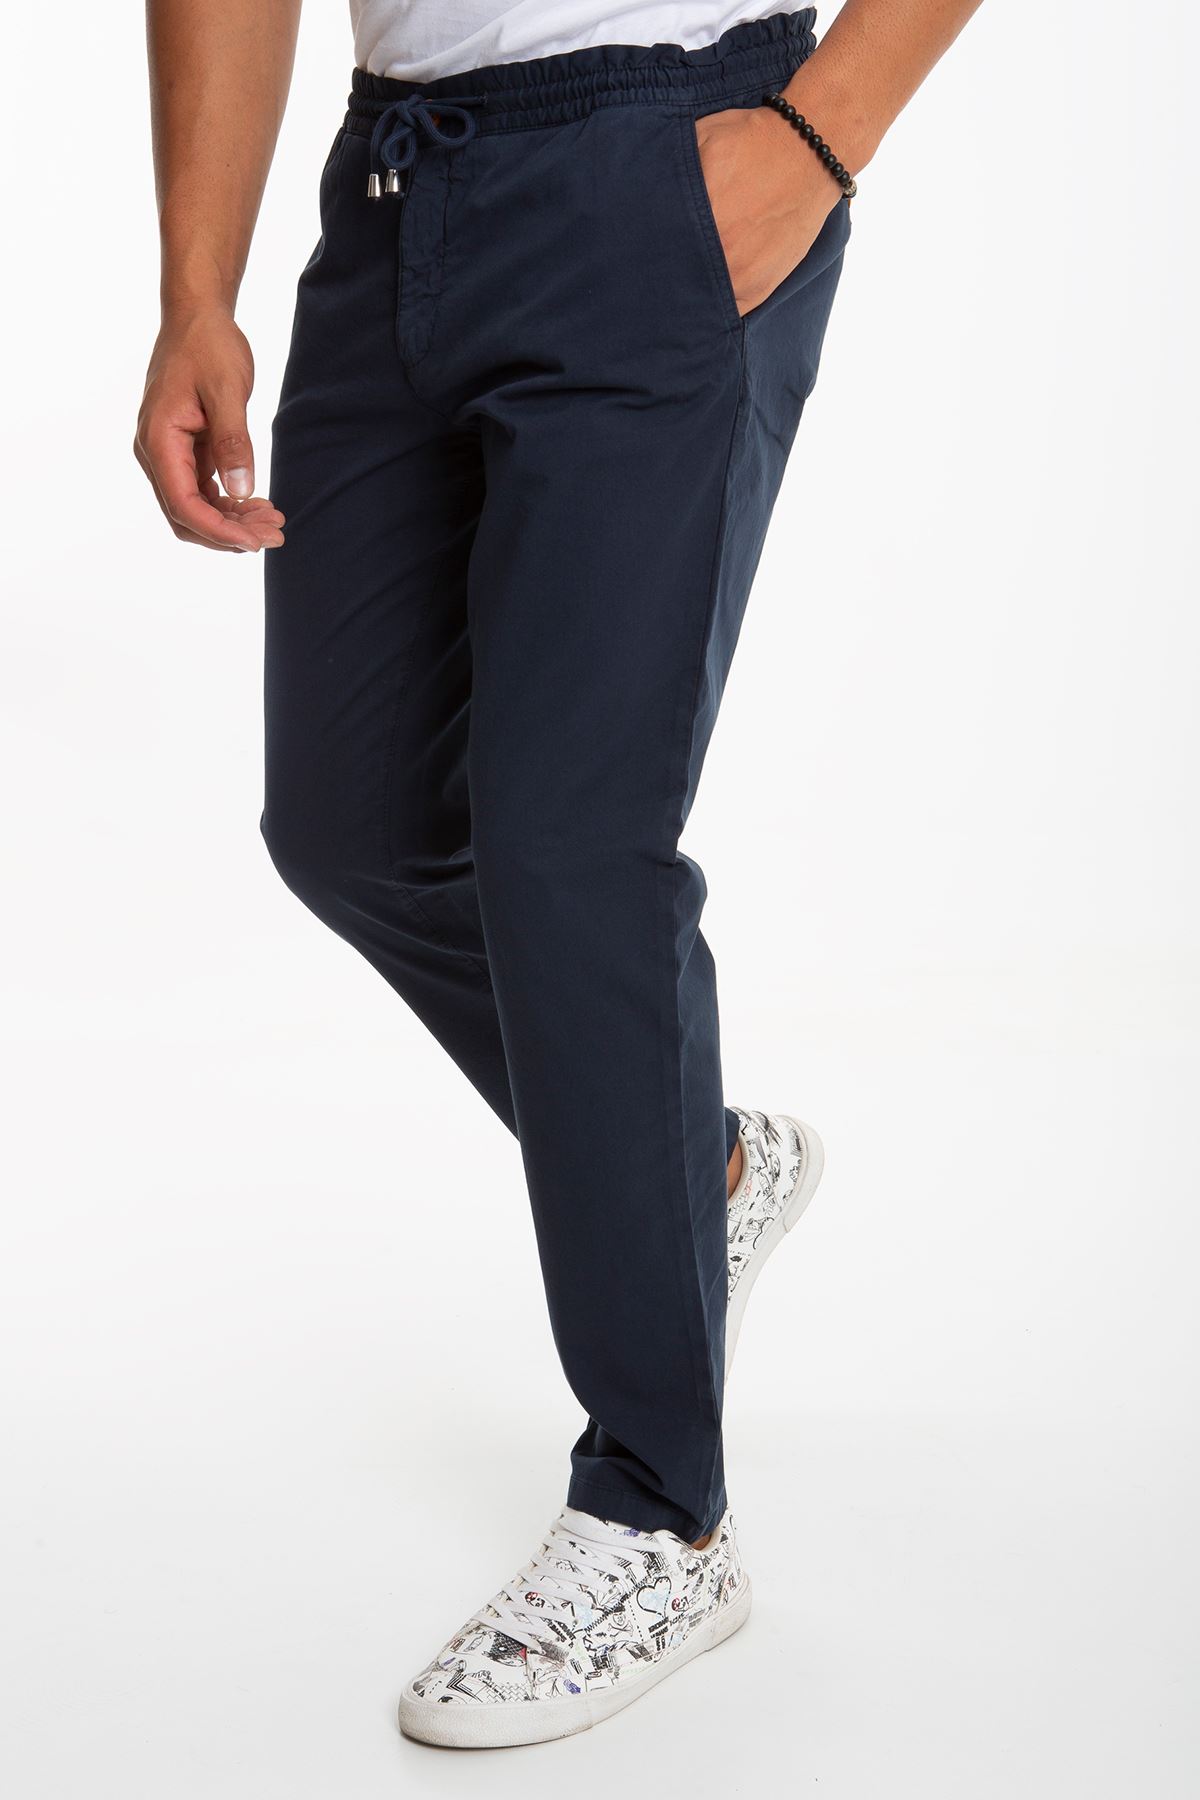 Fitz Roy Erkek Lacivert Beli Lastikli İp Bağlamalı Modern Fit Pantolon Mirror